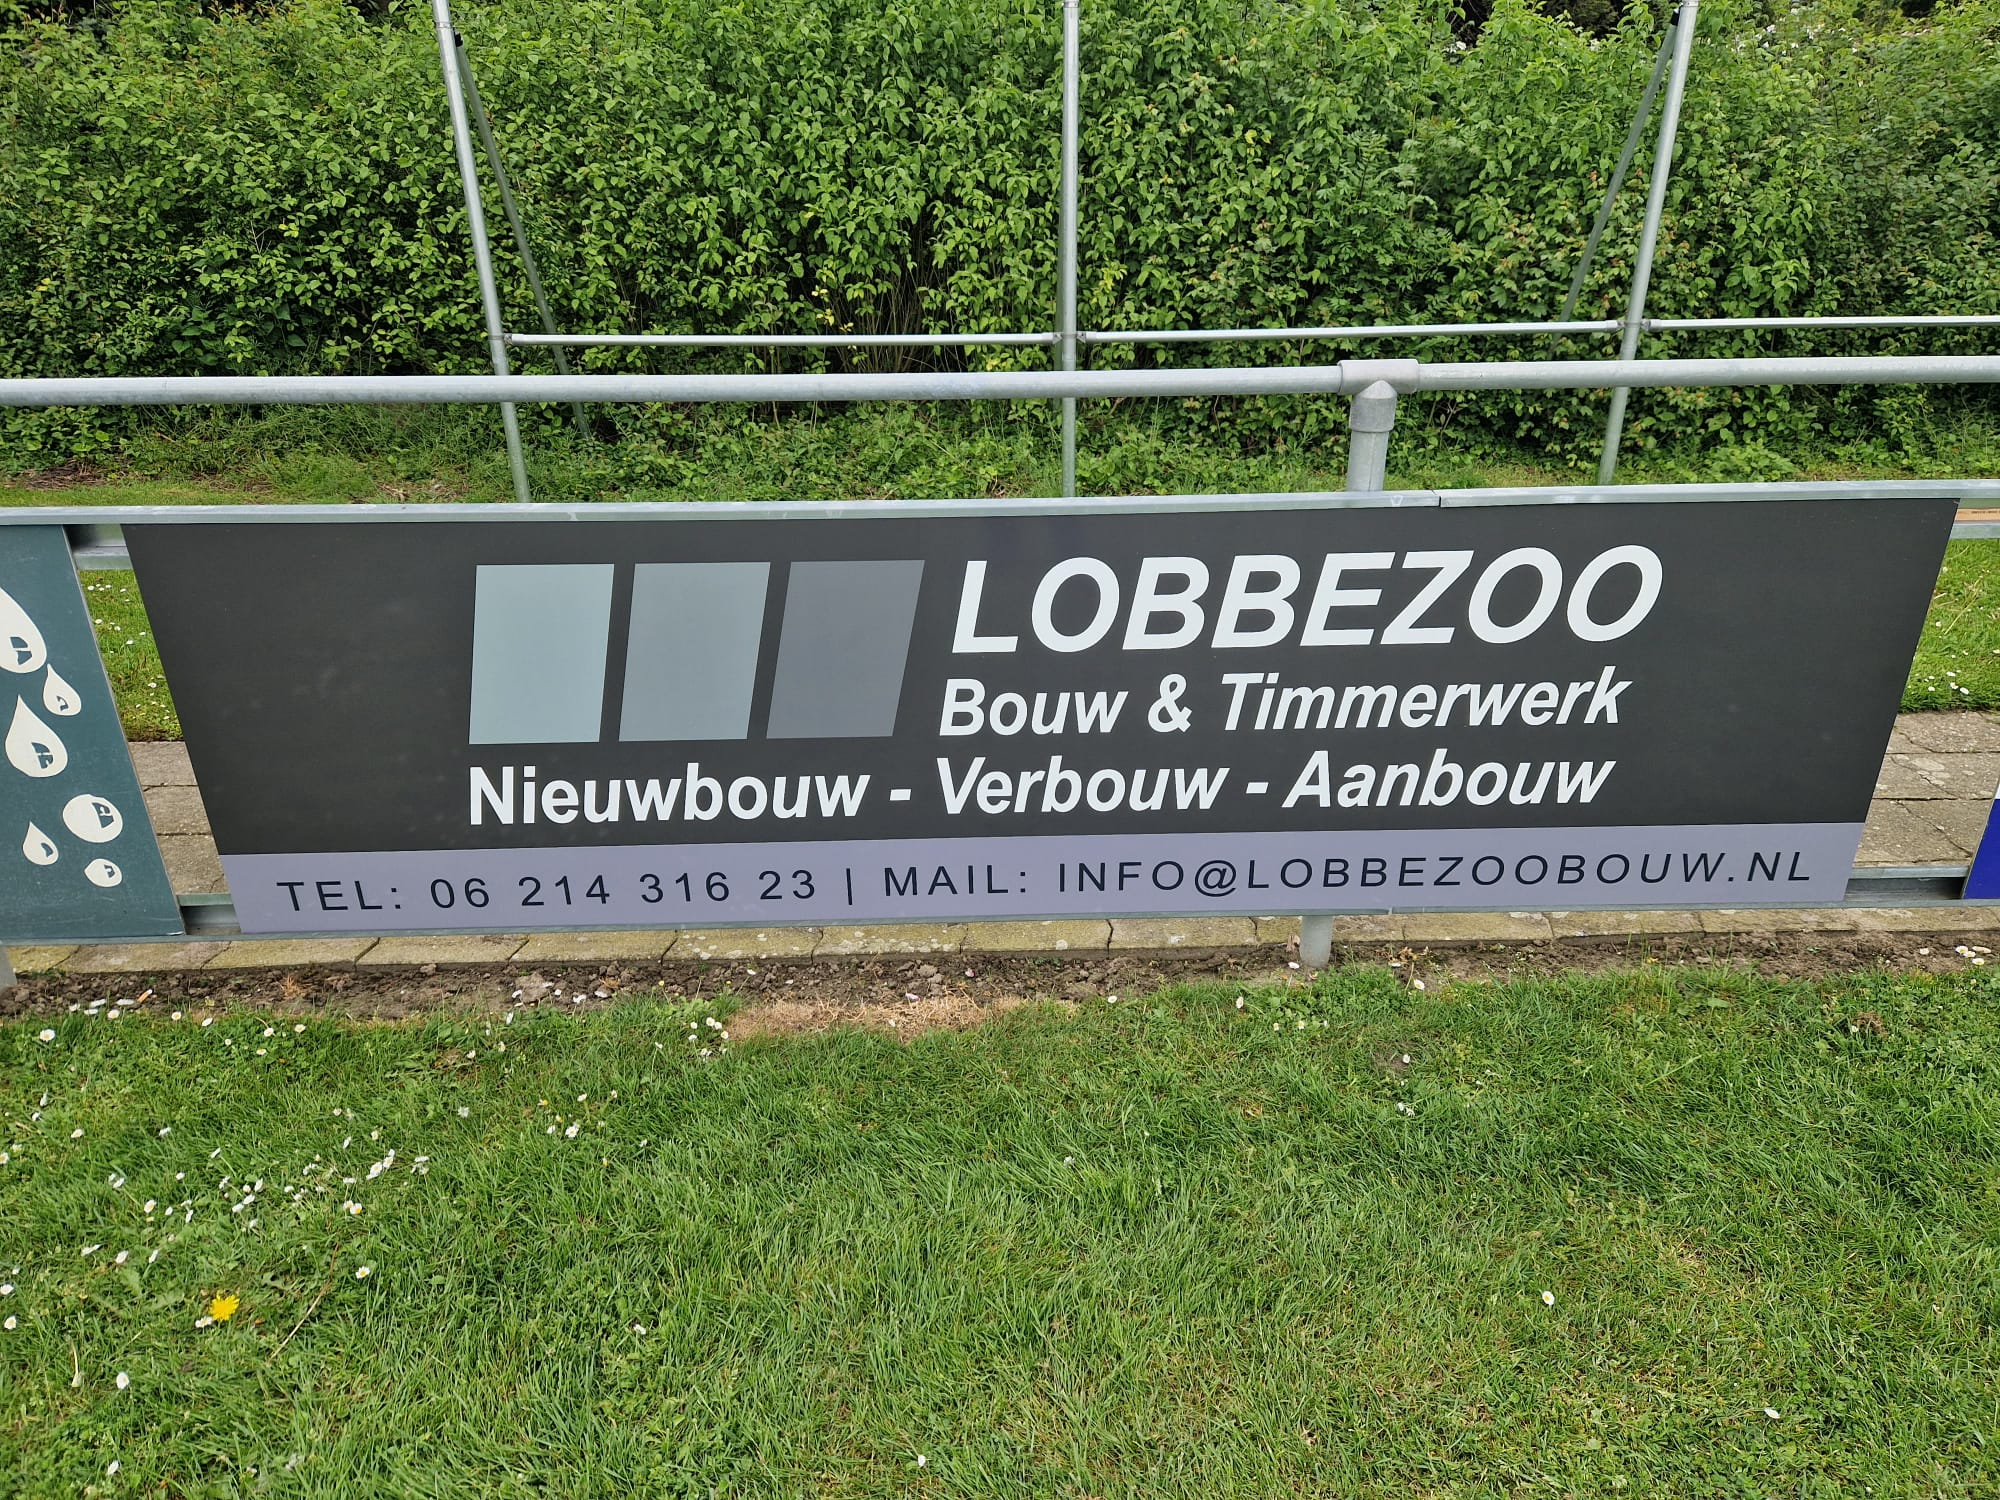 sponsorbord langs voetbalveld met reclame van lobbezoo bouw en timmerwerk